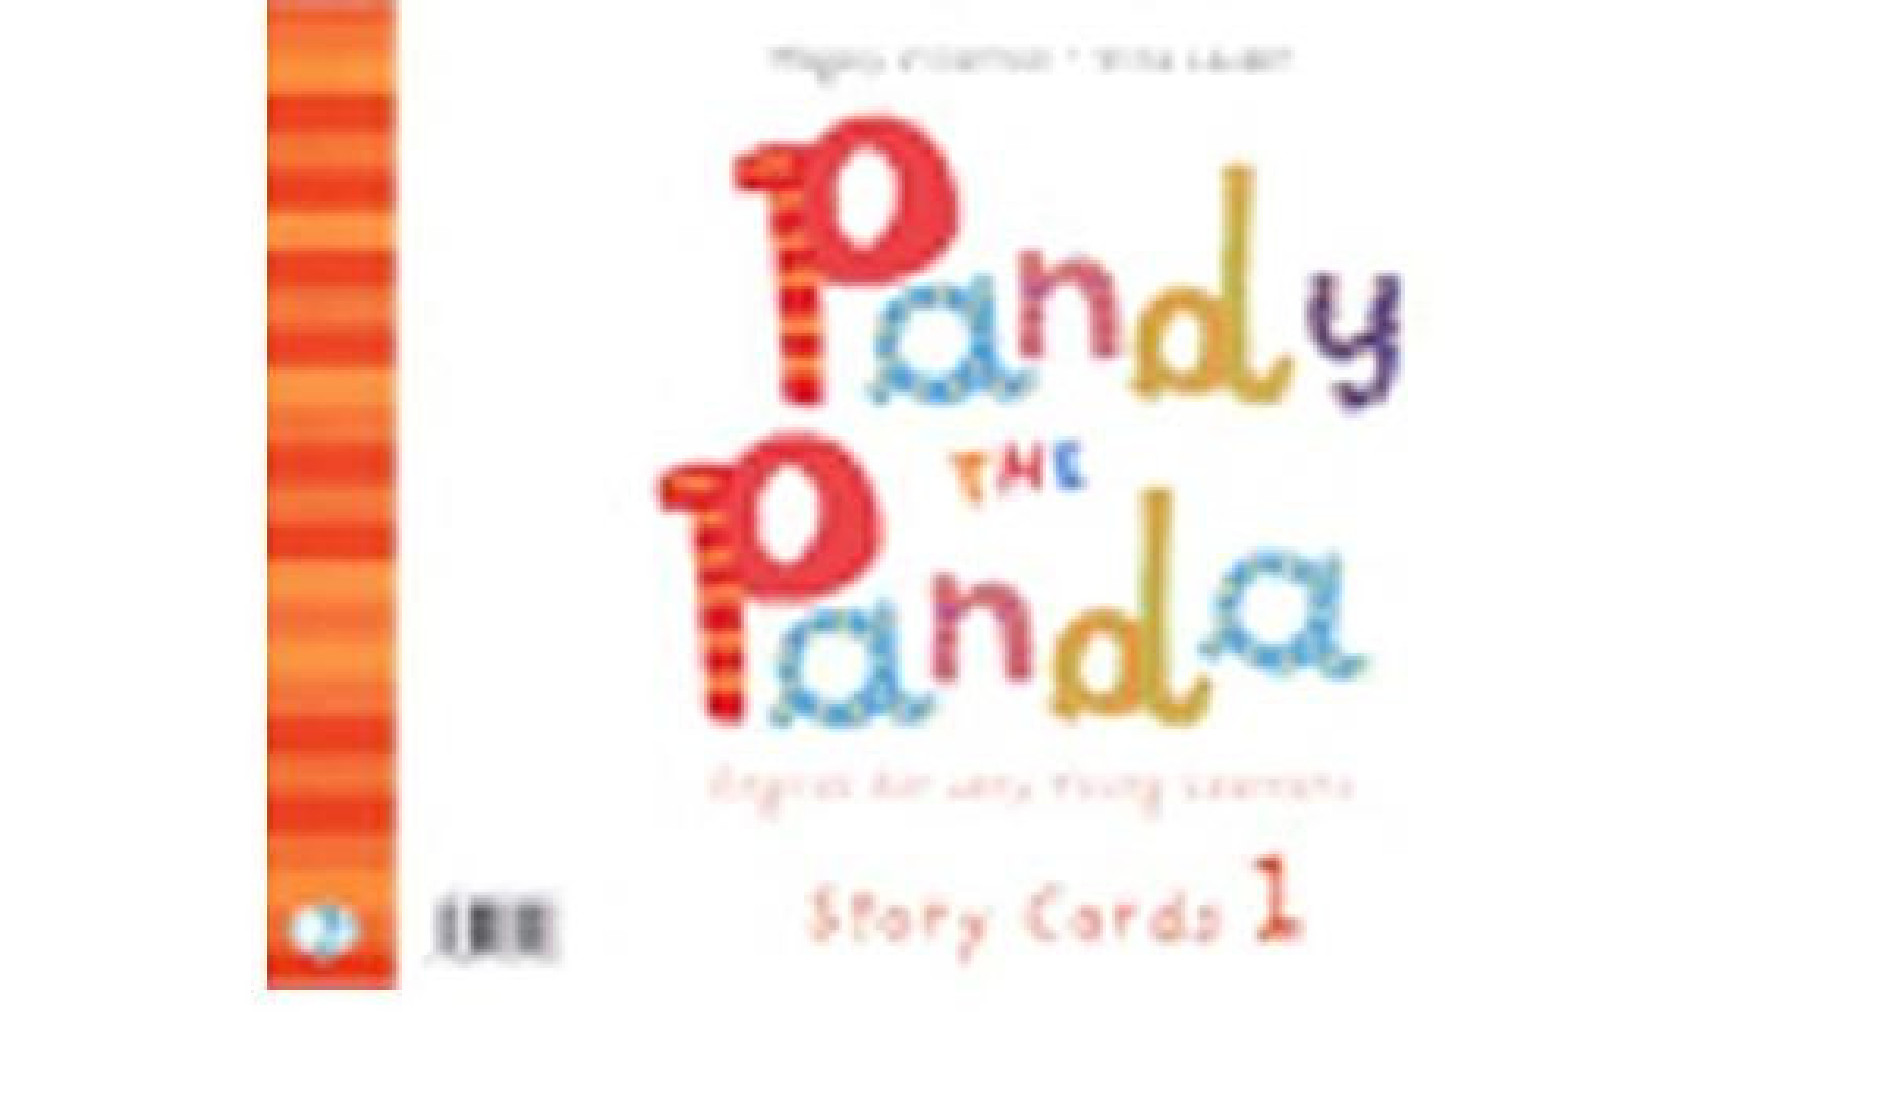 PANDY THE PANDA STORYCARDS 1